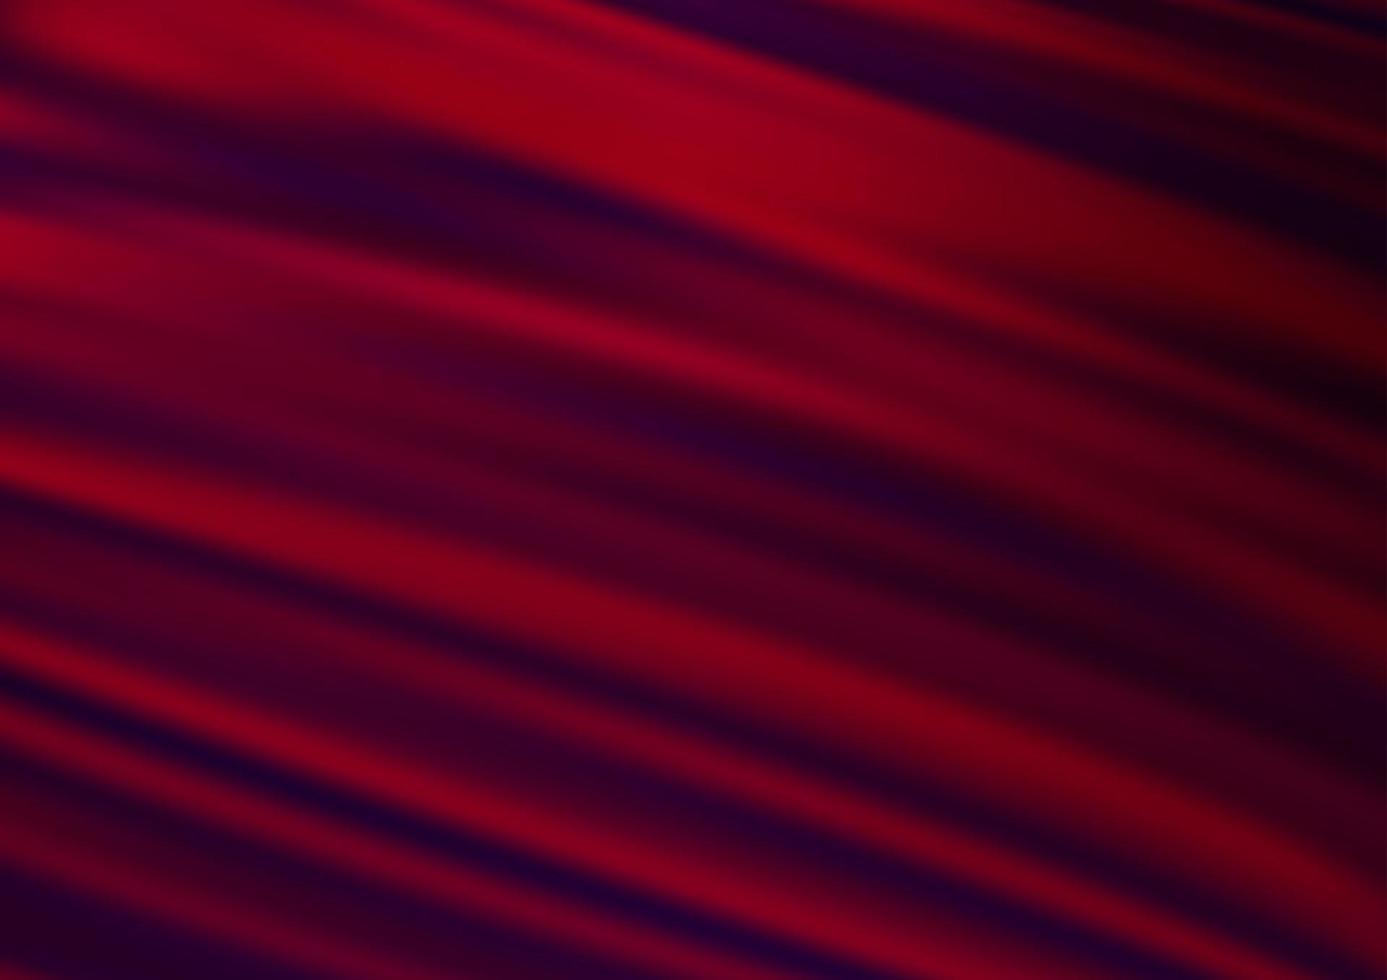 Dark Purple vector blurred shine abstract pattern.